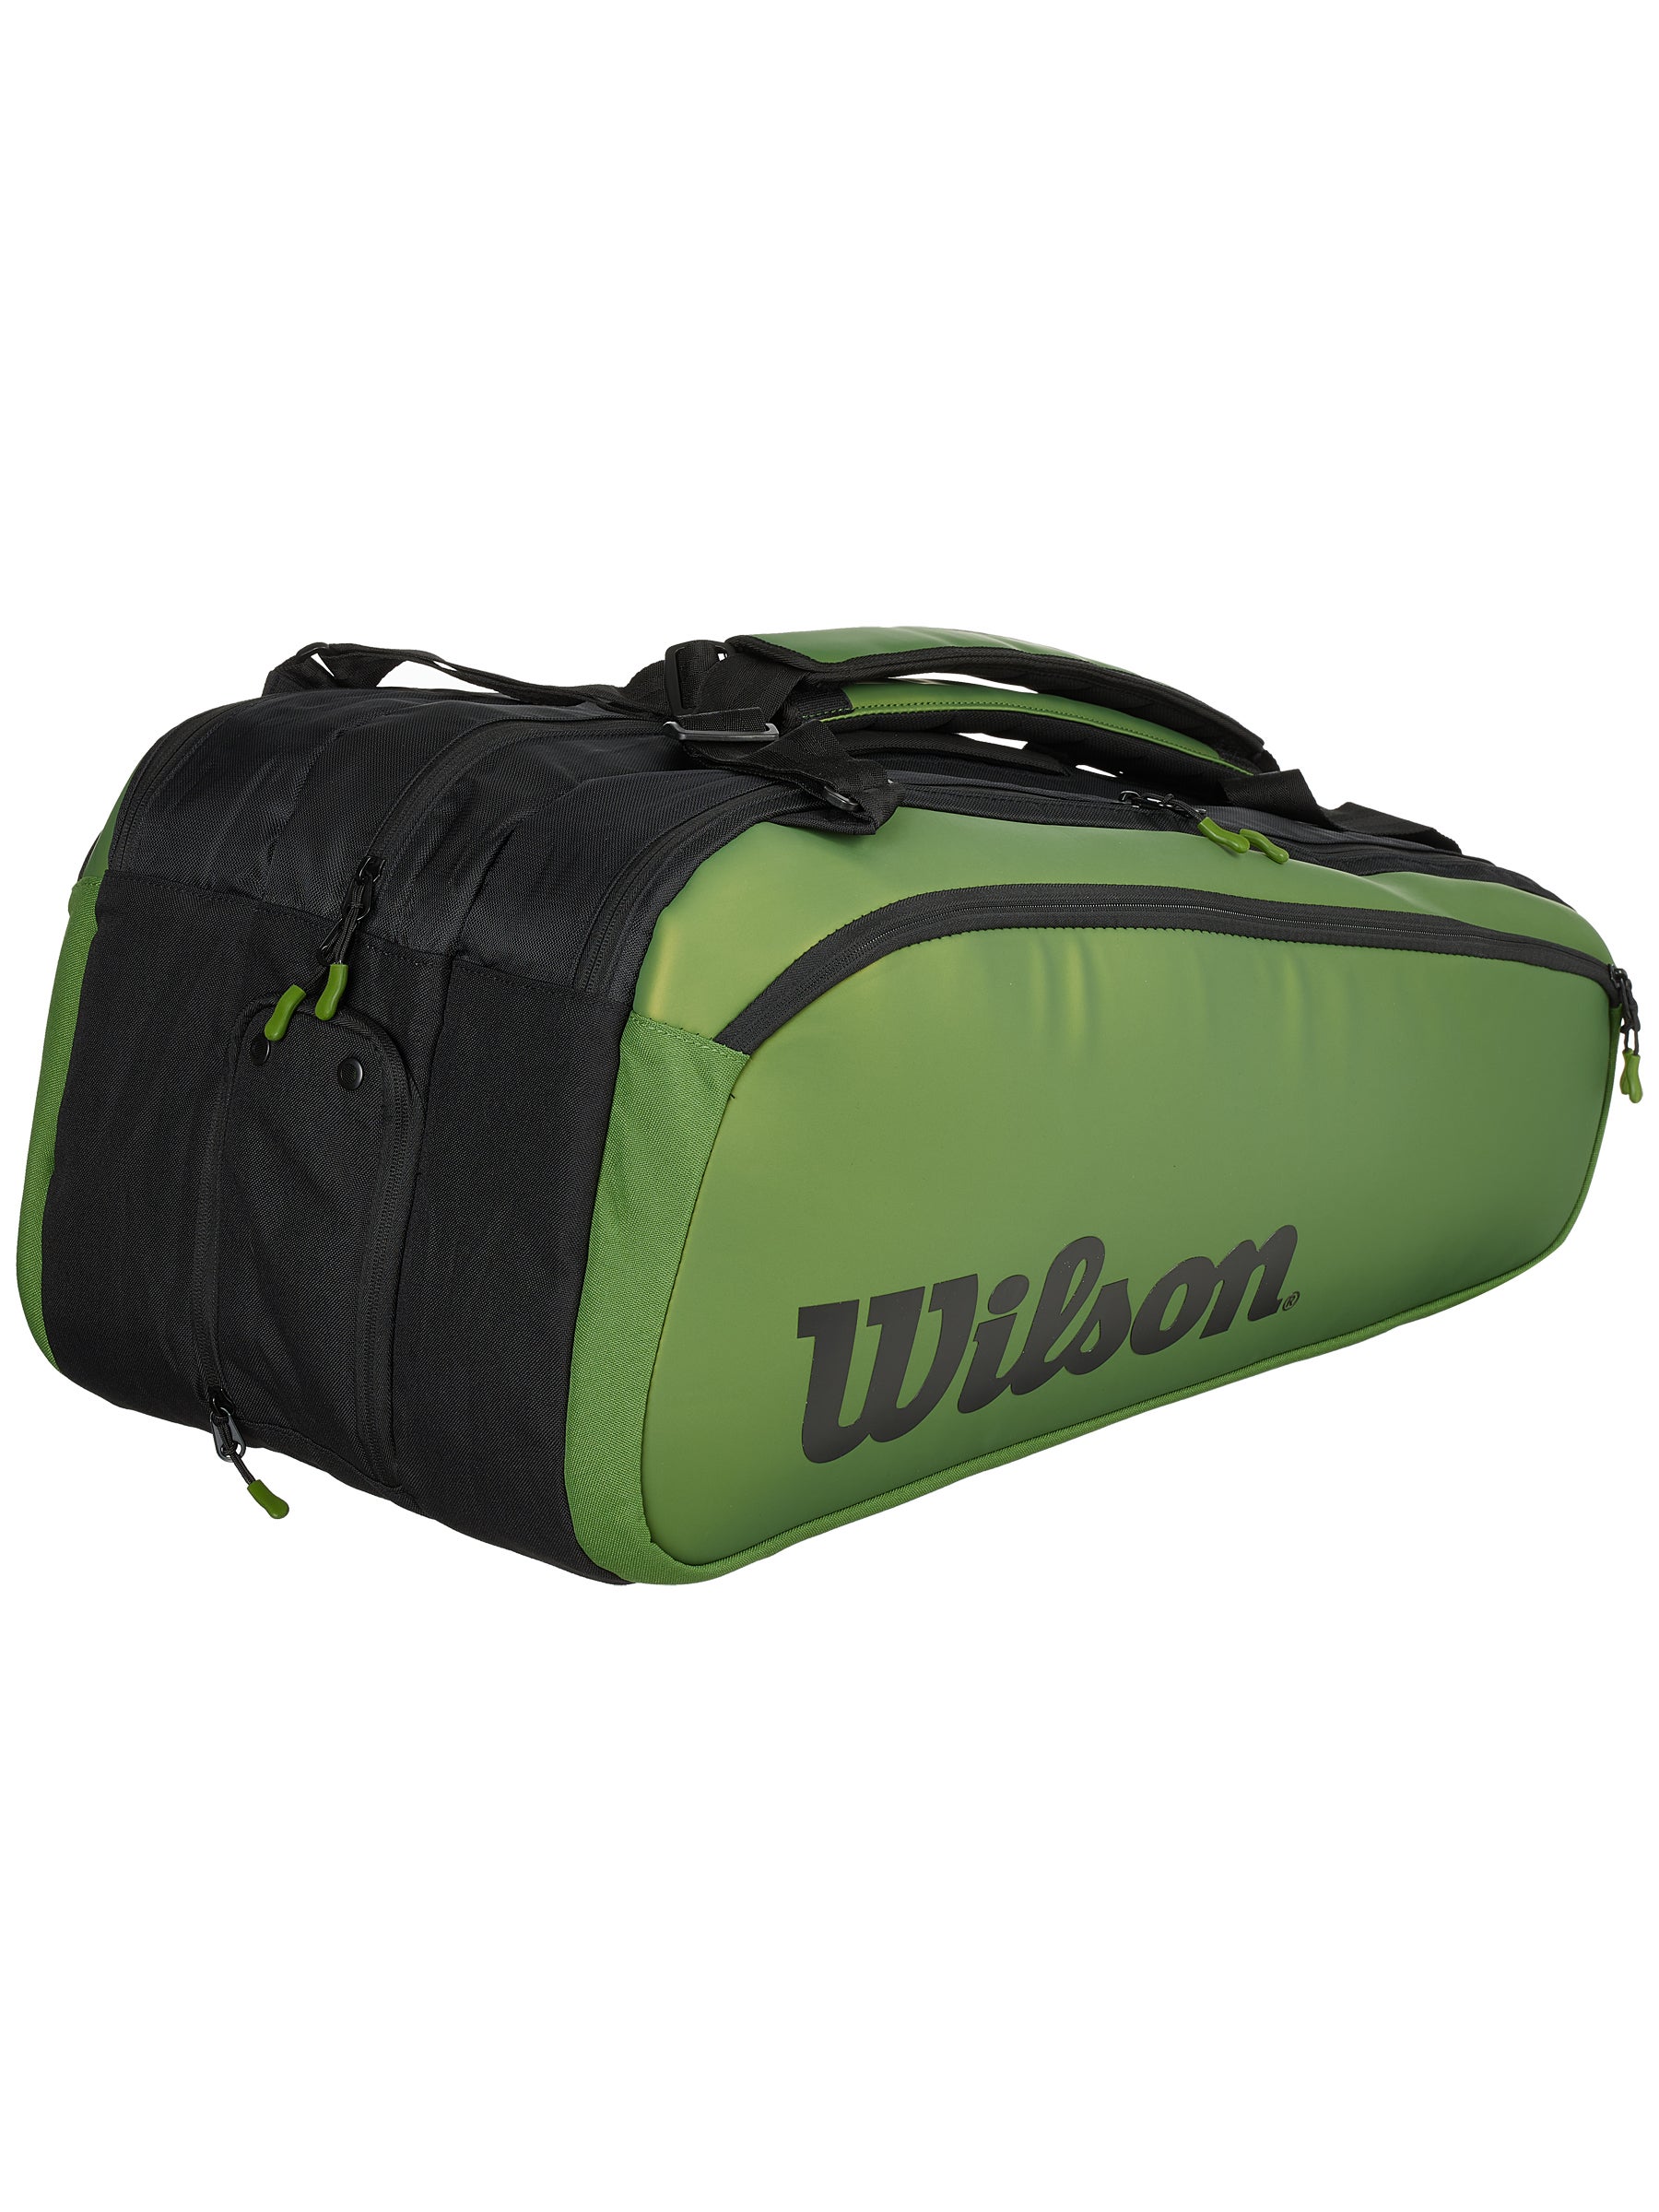 Black/Green Wilson Blade Collection Racket Bag 15 Pack 